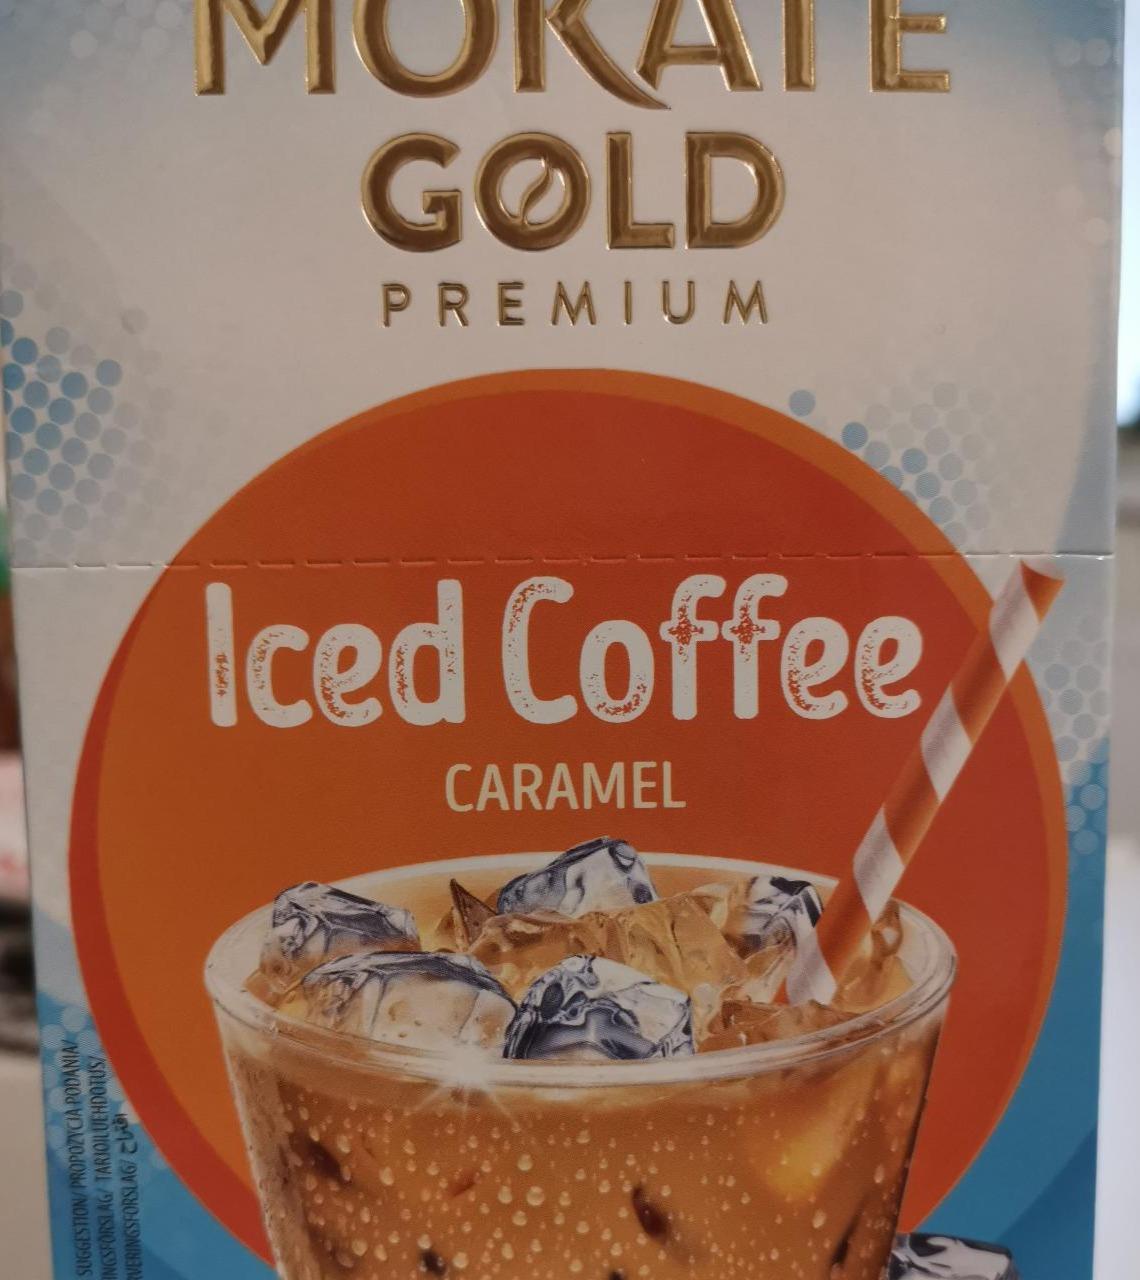 Fotografie - Gold Premium Iced Coffee Caramel Mokate